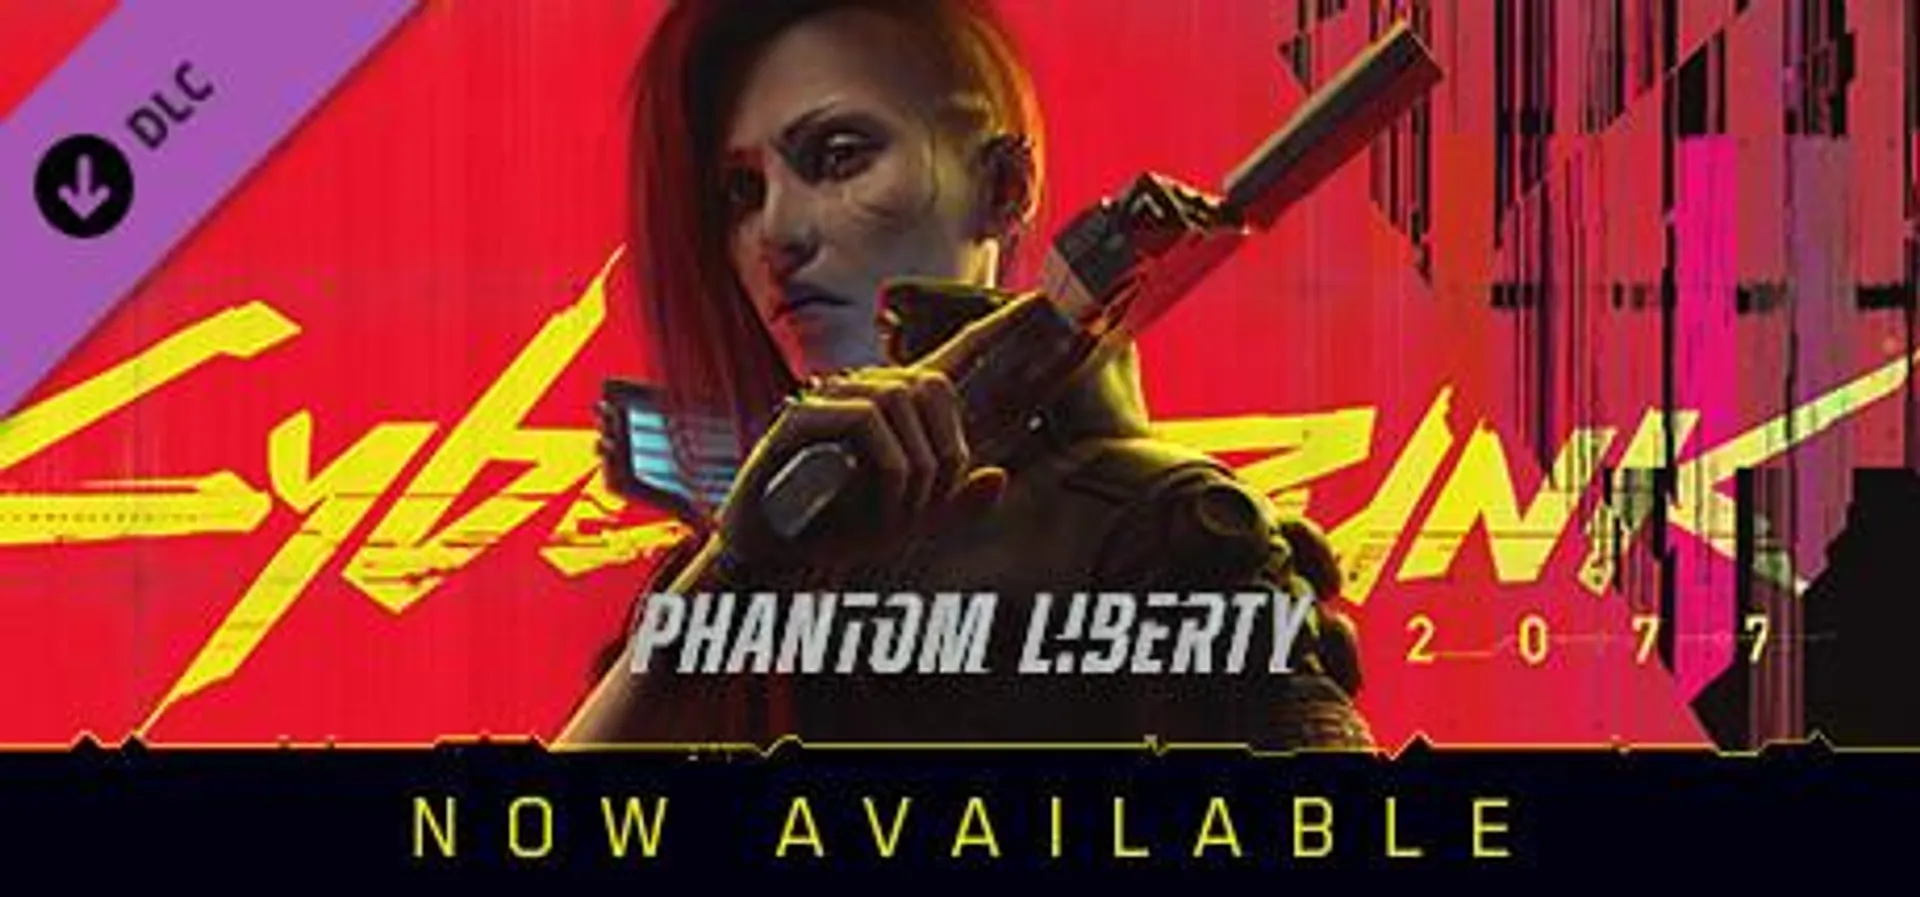 Save 15% on Cyberpunk 2077: Phantom Liberty on Steam